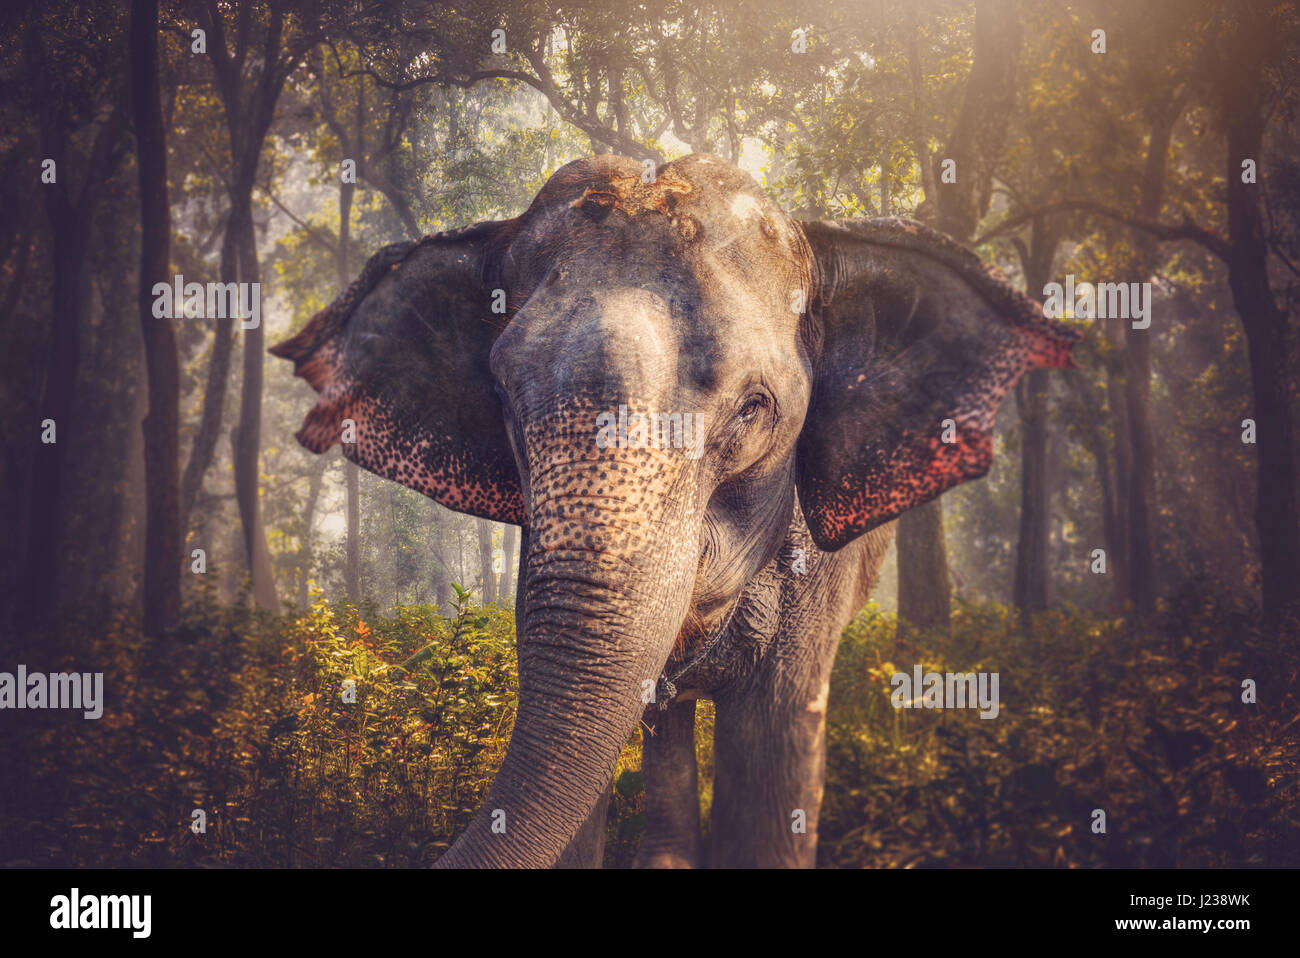 Download A Big and Majestic Elephant Wallpaper | Wallpapers.com